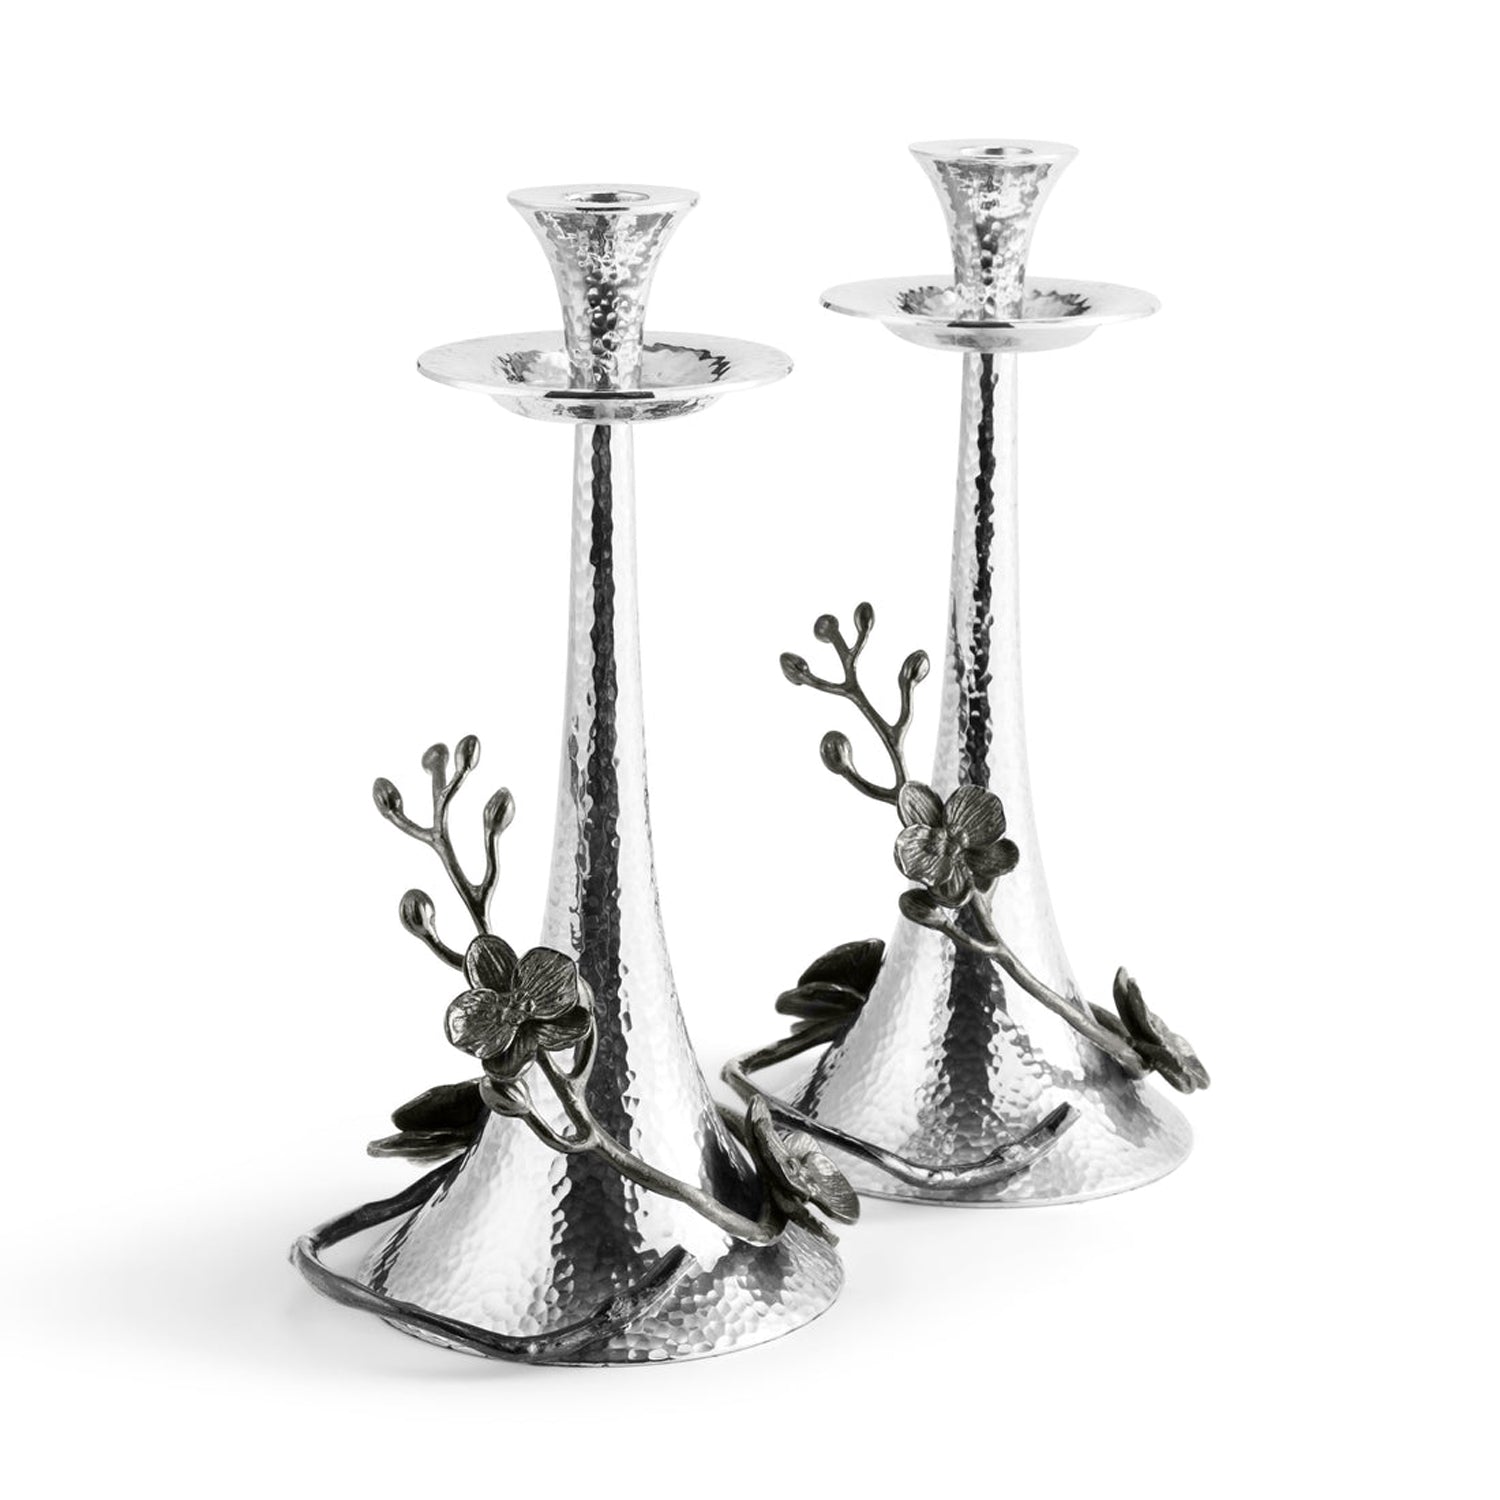 Michael Aram - Black Orchid Candleholders, 5.5"L x 5.25"W x 11"H each